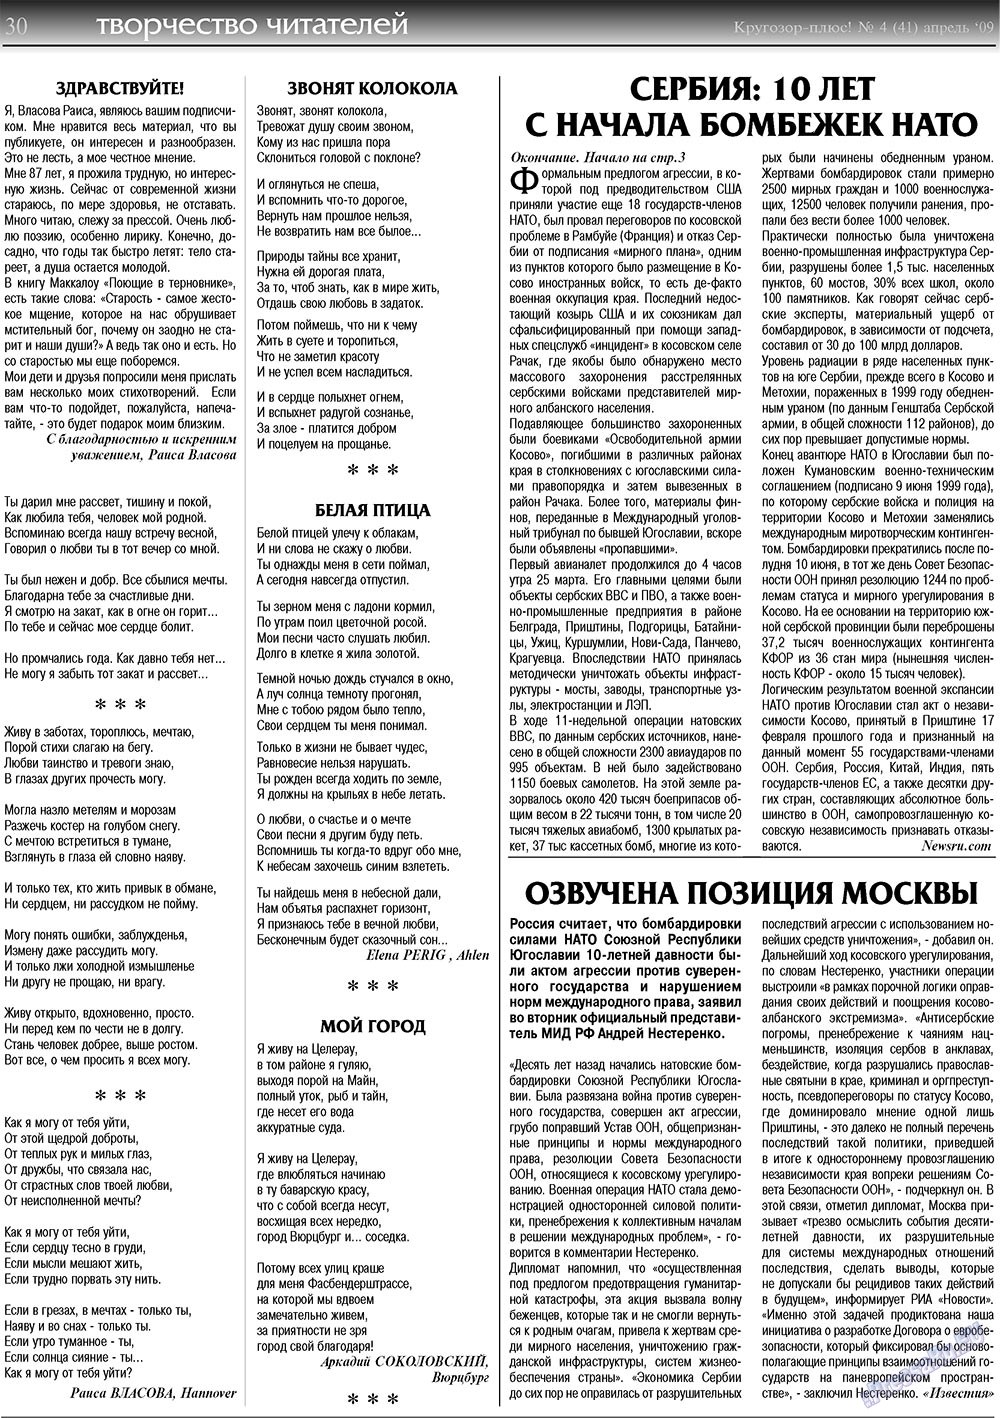 Кругозор плюс! (газета). 2009 год, номер 4, стр. 30